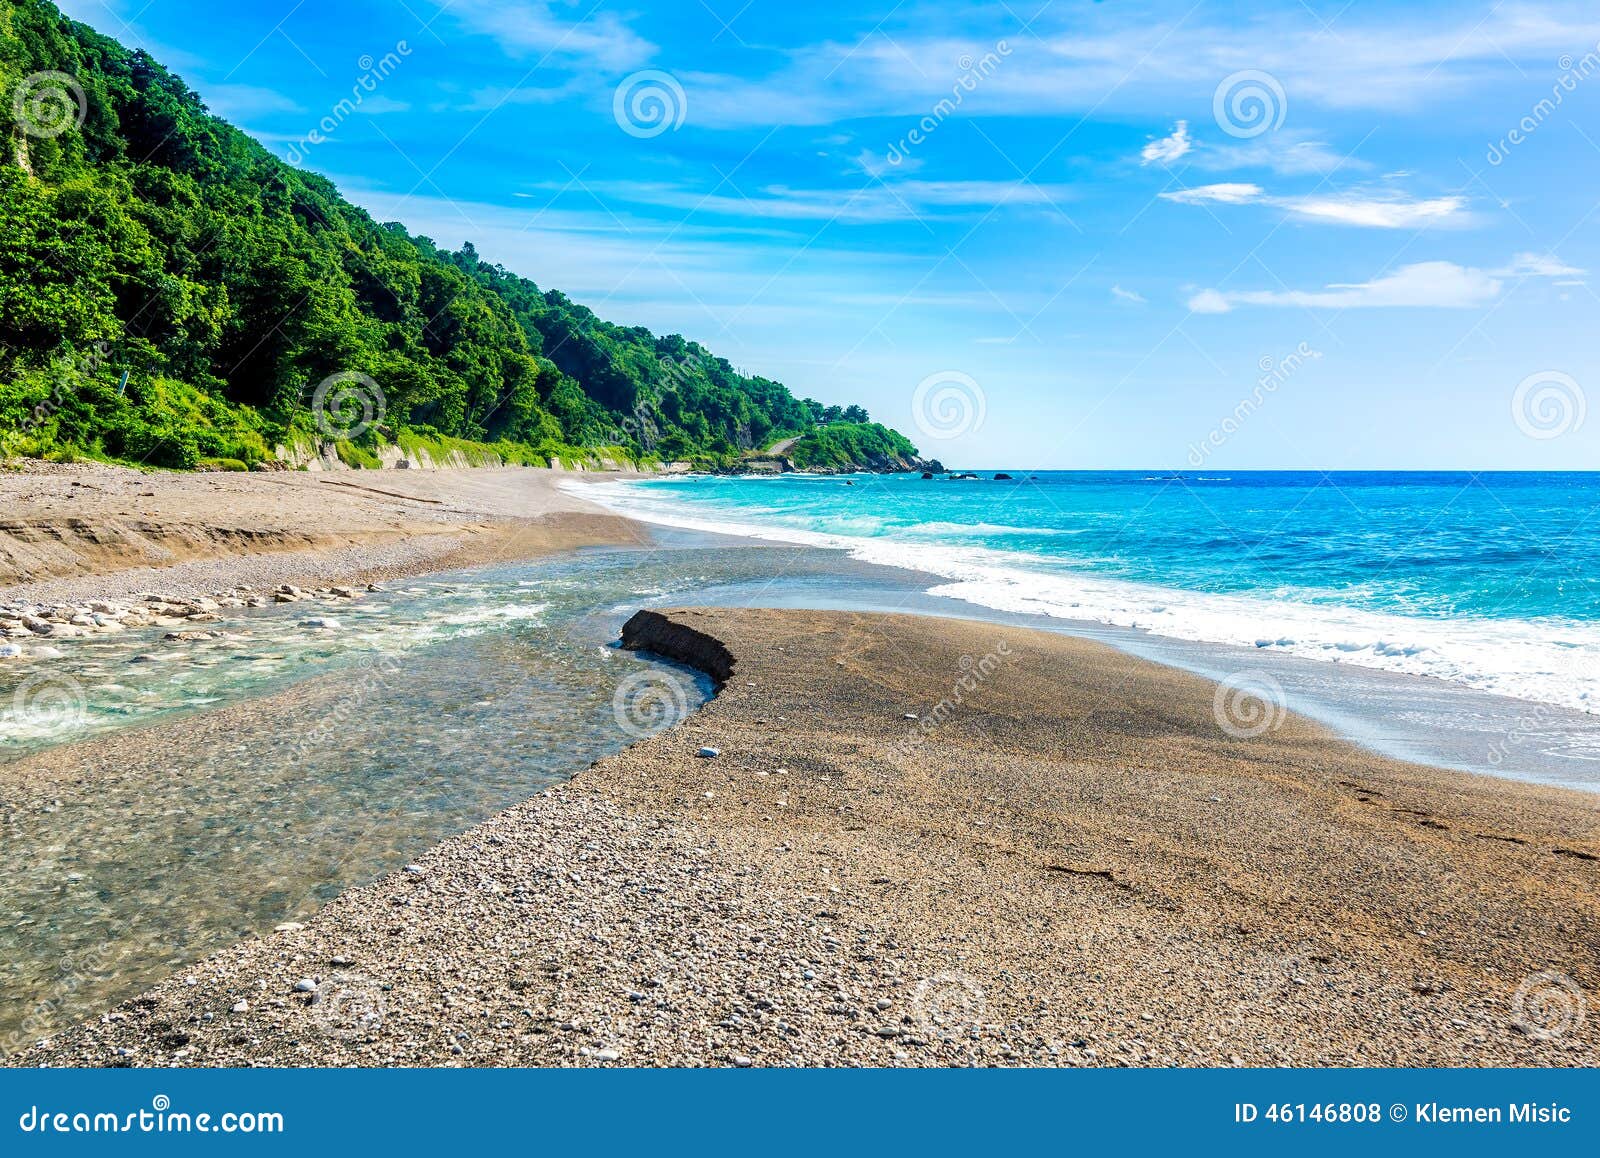 mouth of the river to the sea on playa sana rafael beach, barahona, dominican republic